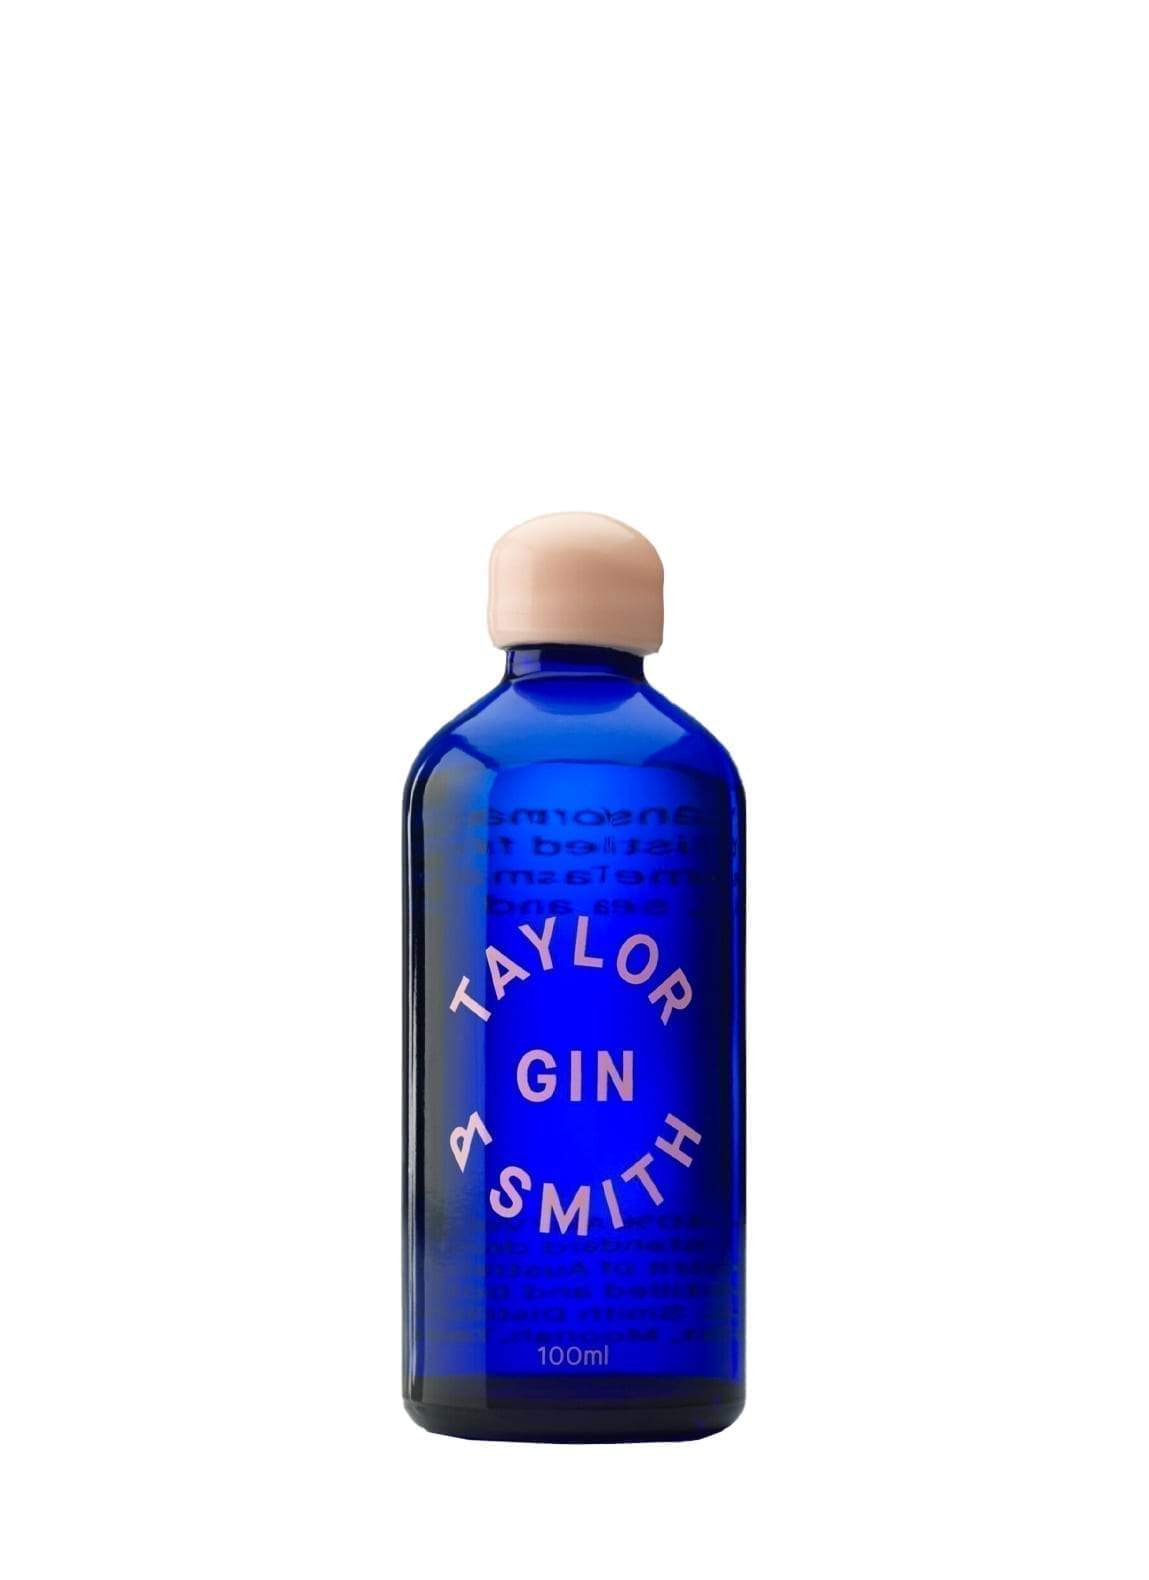 Taylor  smith Gin MINI 40% 100ml Spirits of France